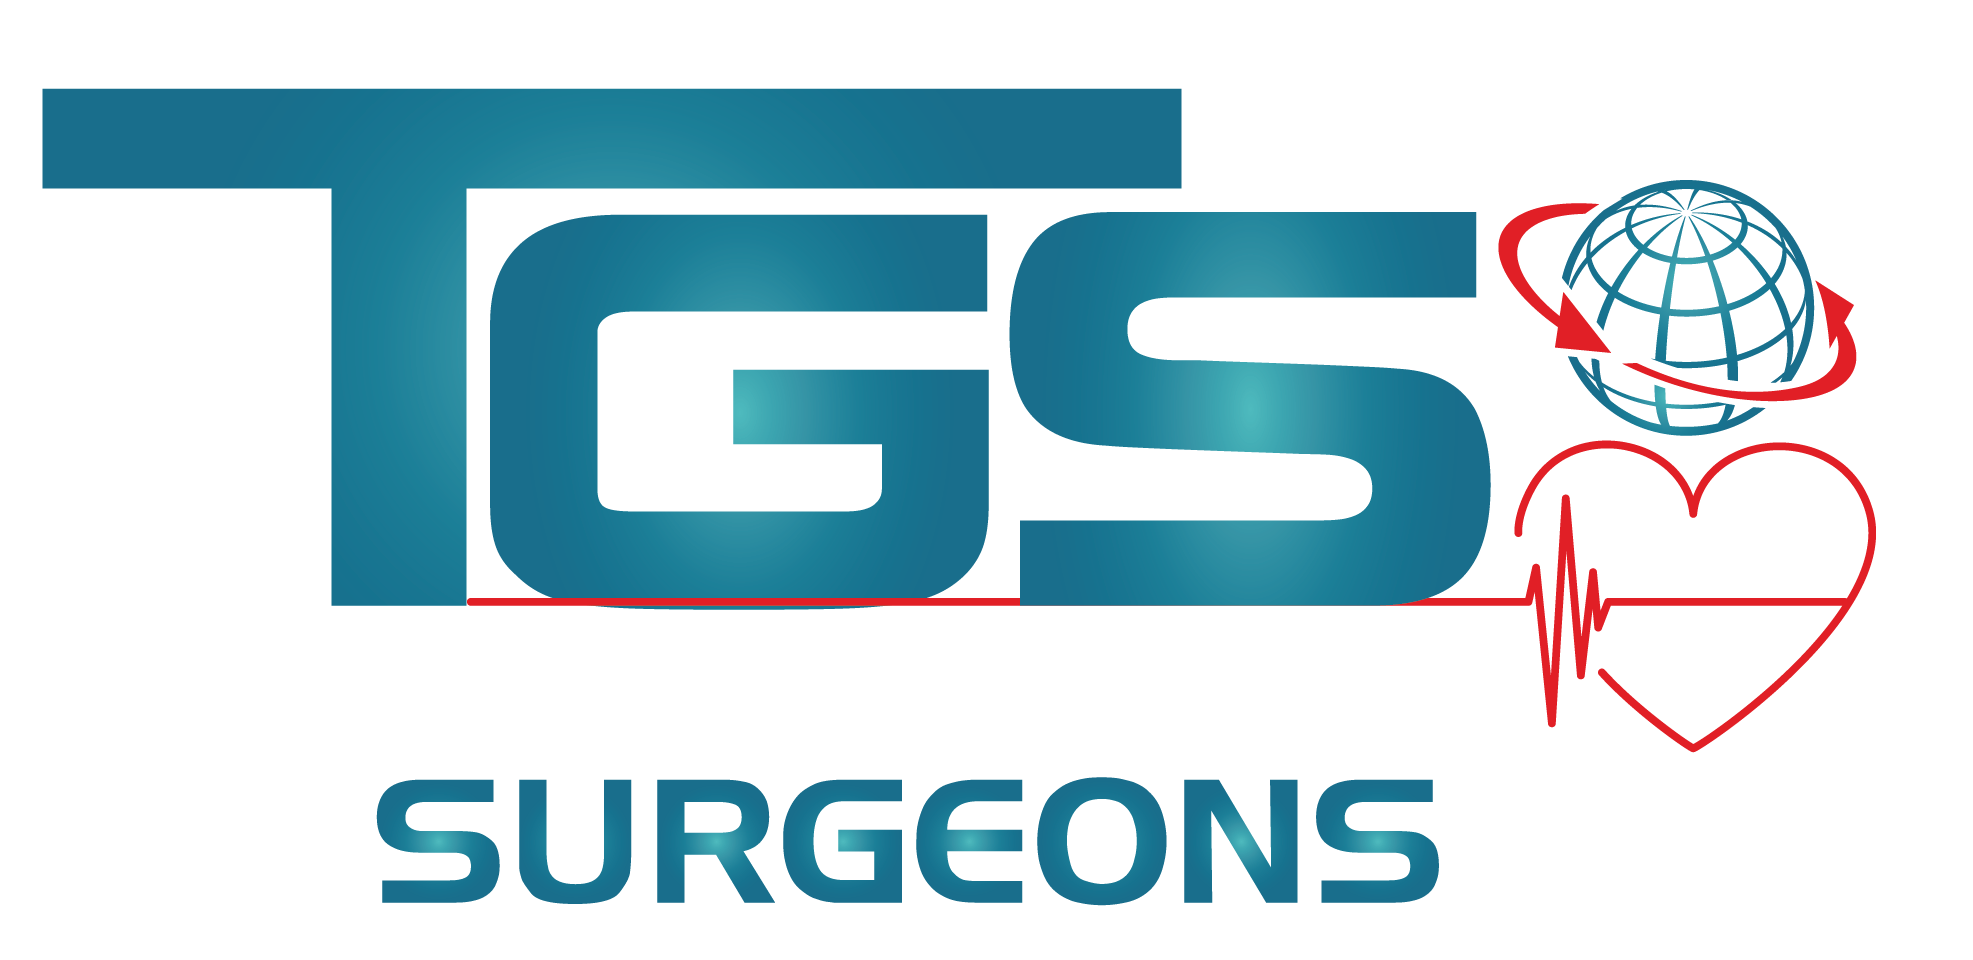 Top Global Surgeons